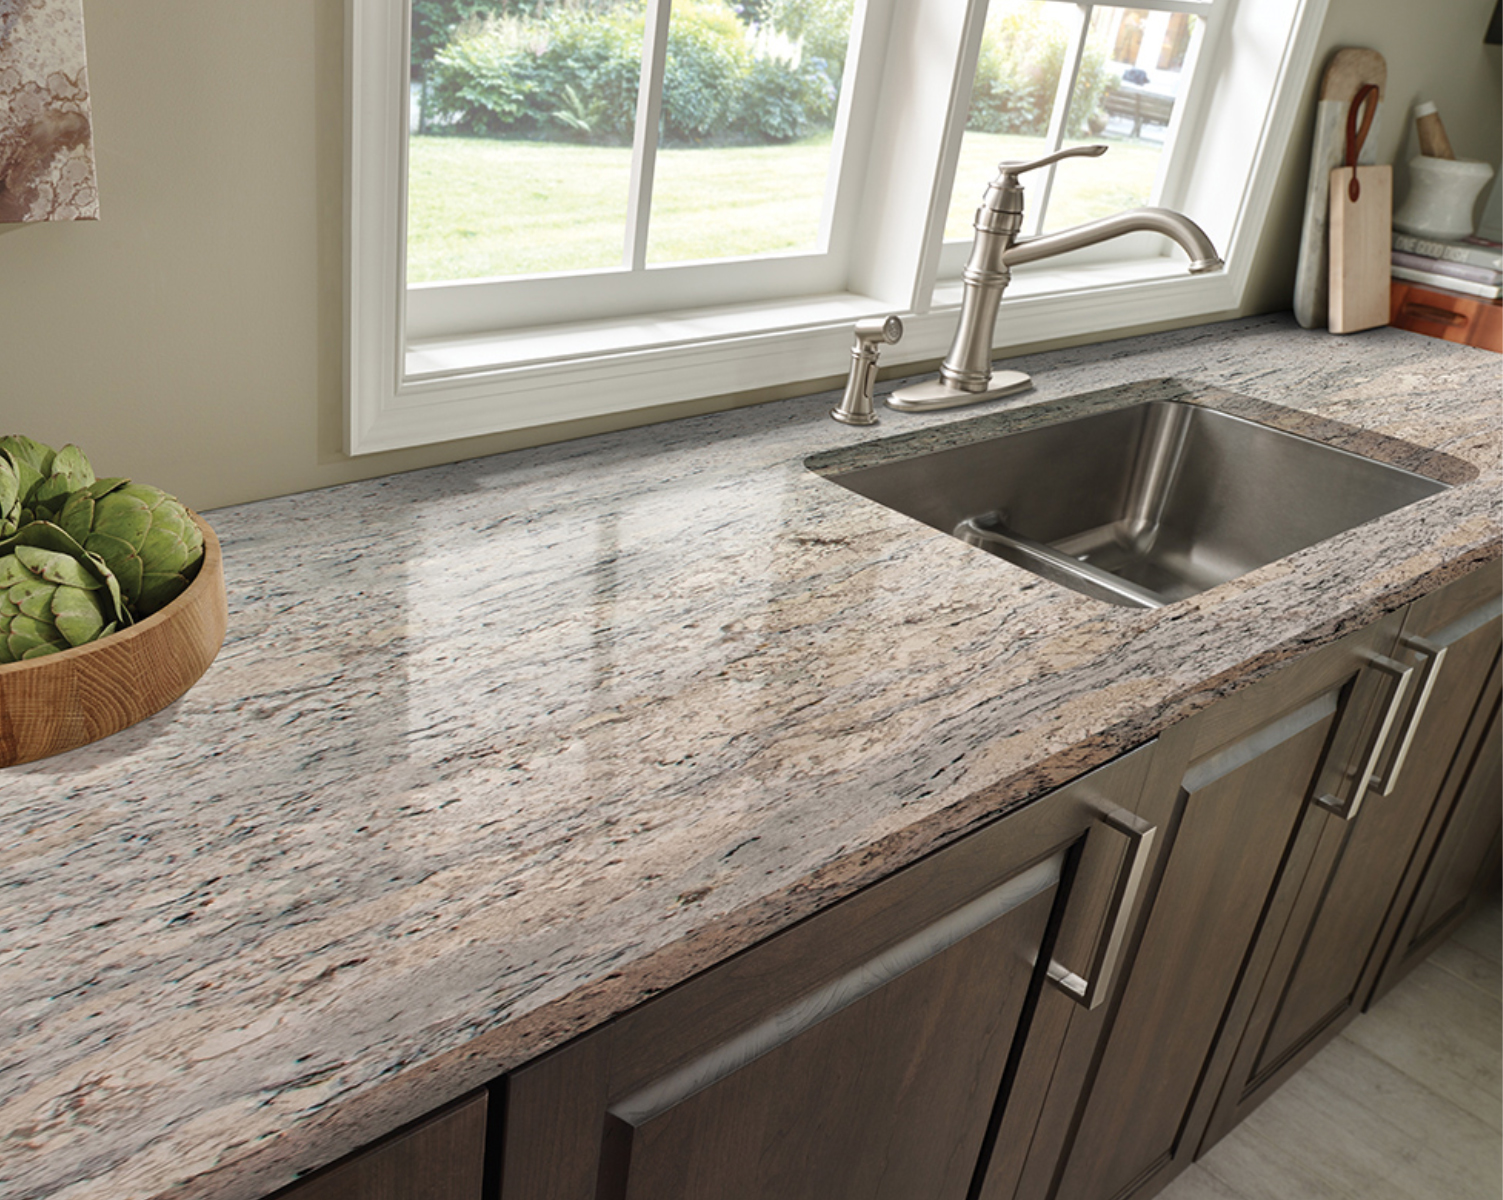 Granite Sales And Install Granite Countertops Heartland Design Ia